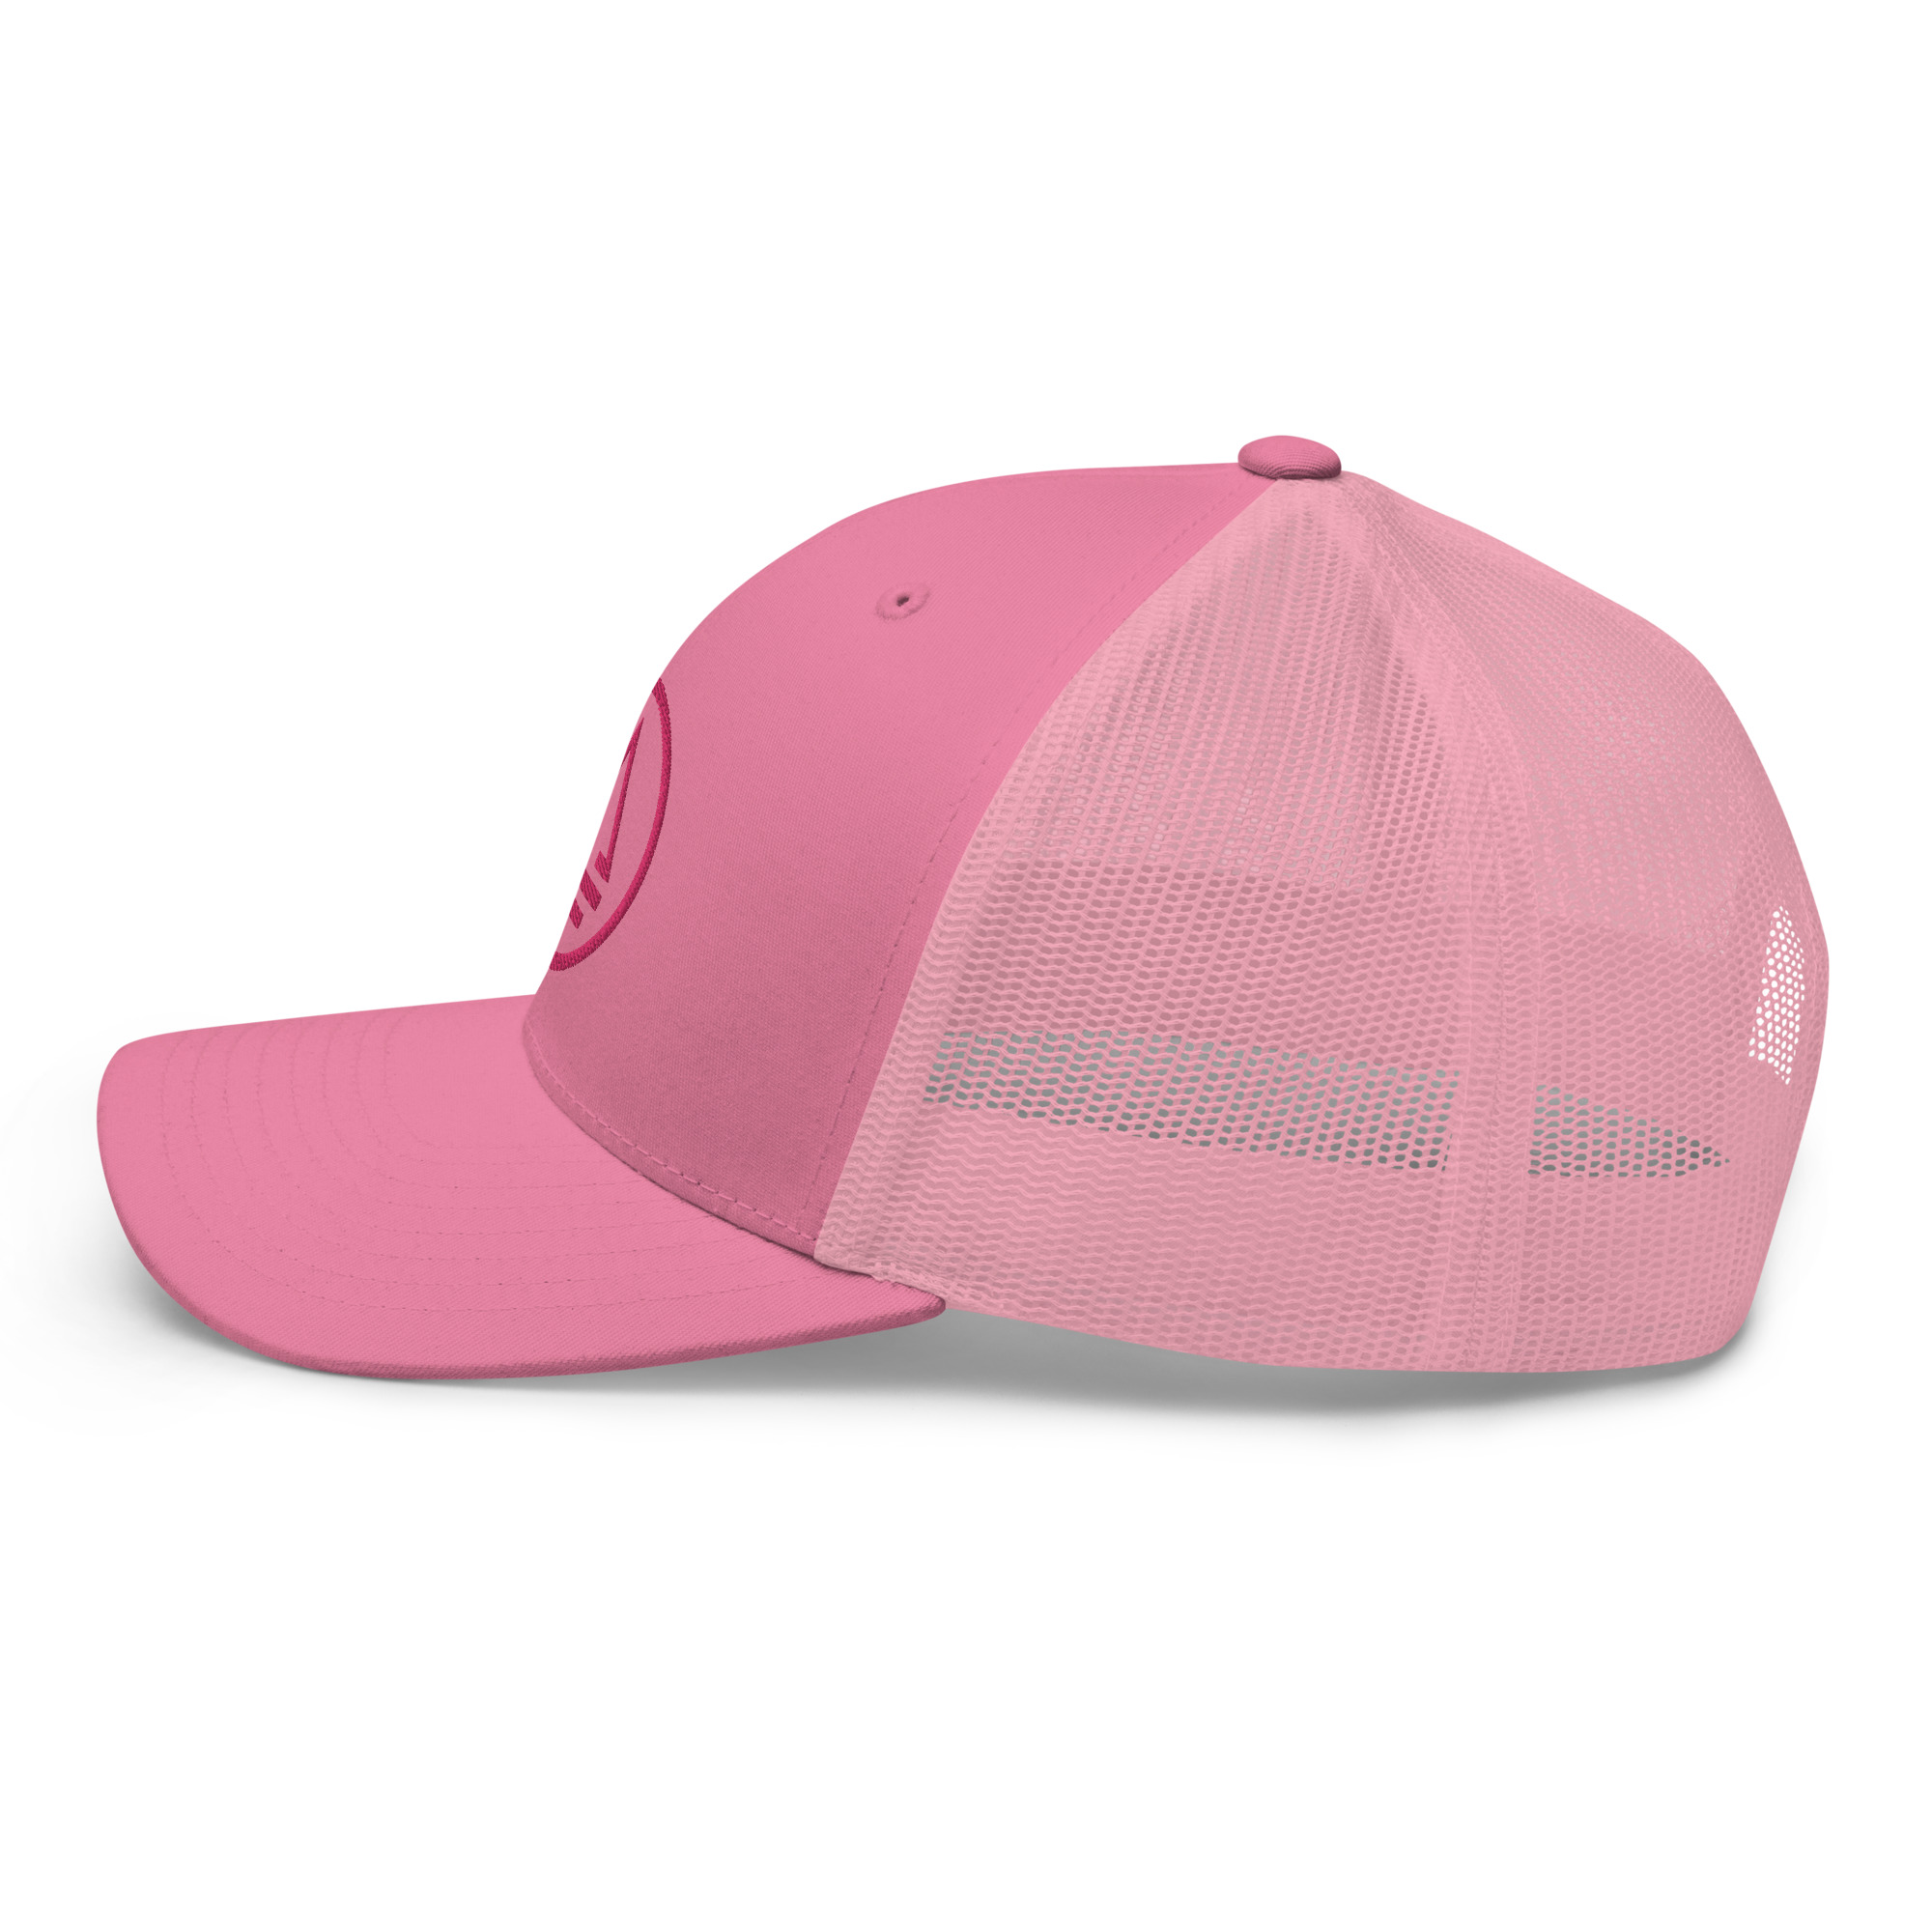 retro-trucker-hat-pink-left-64c9ab0170135.jpg